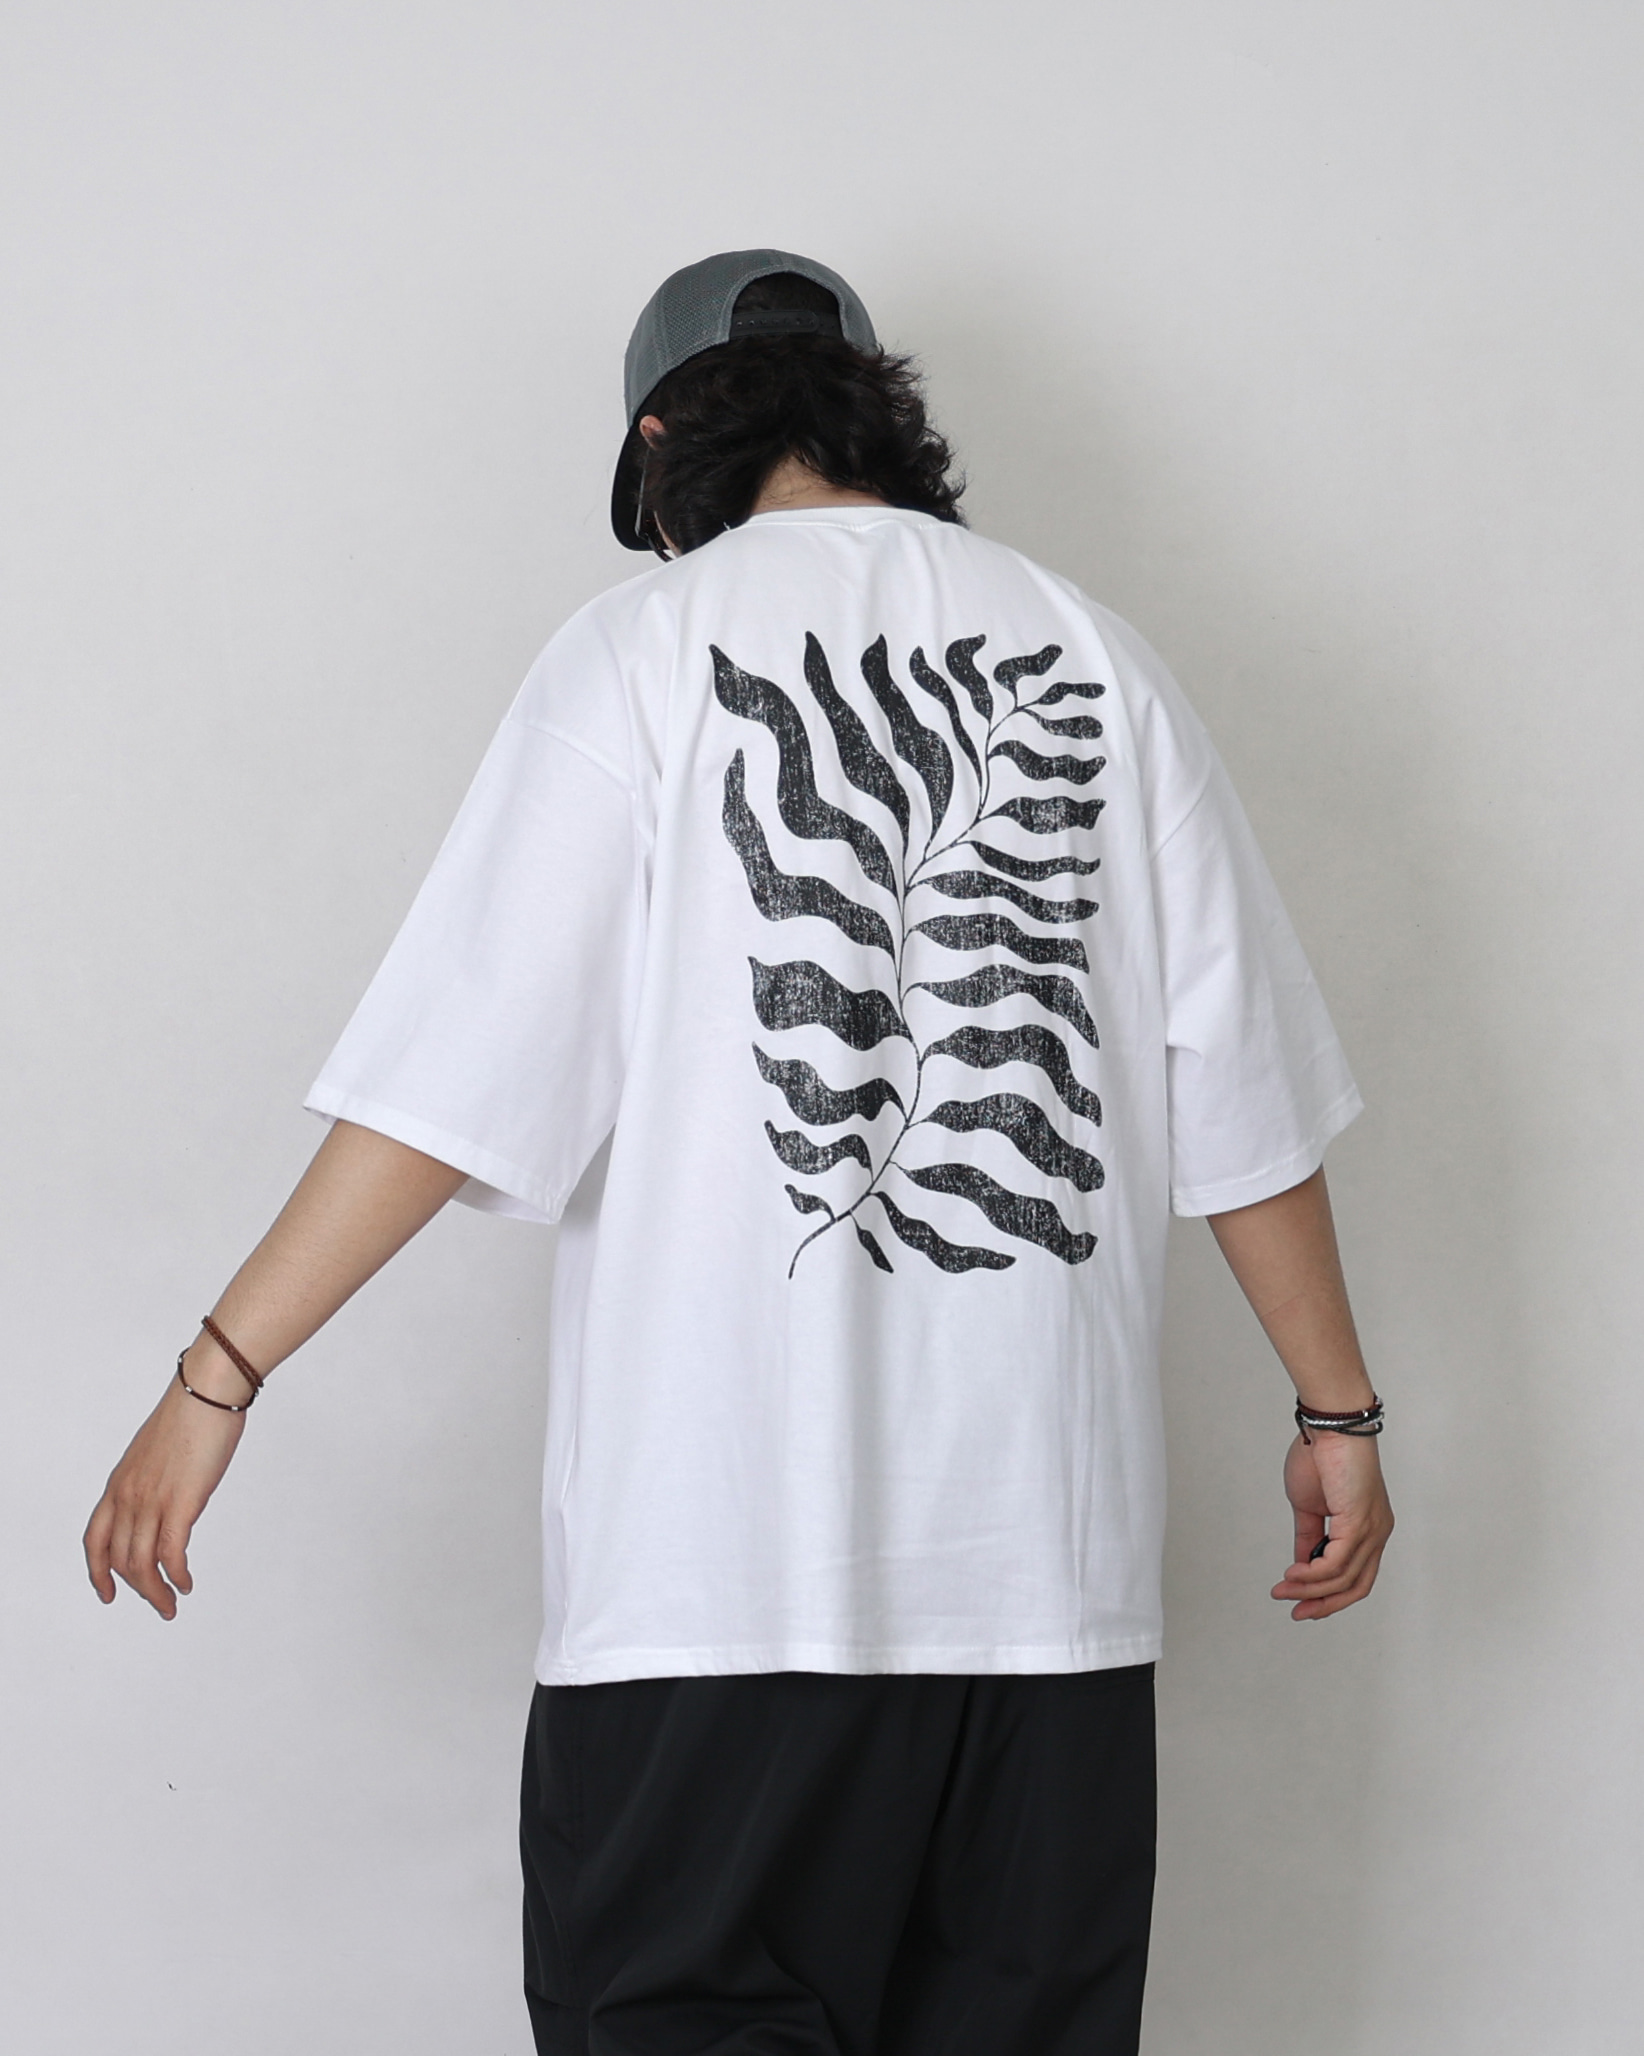 Square Mono Leaf Over T Shirts (Black/Charcoal/White)